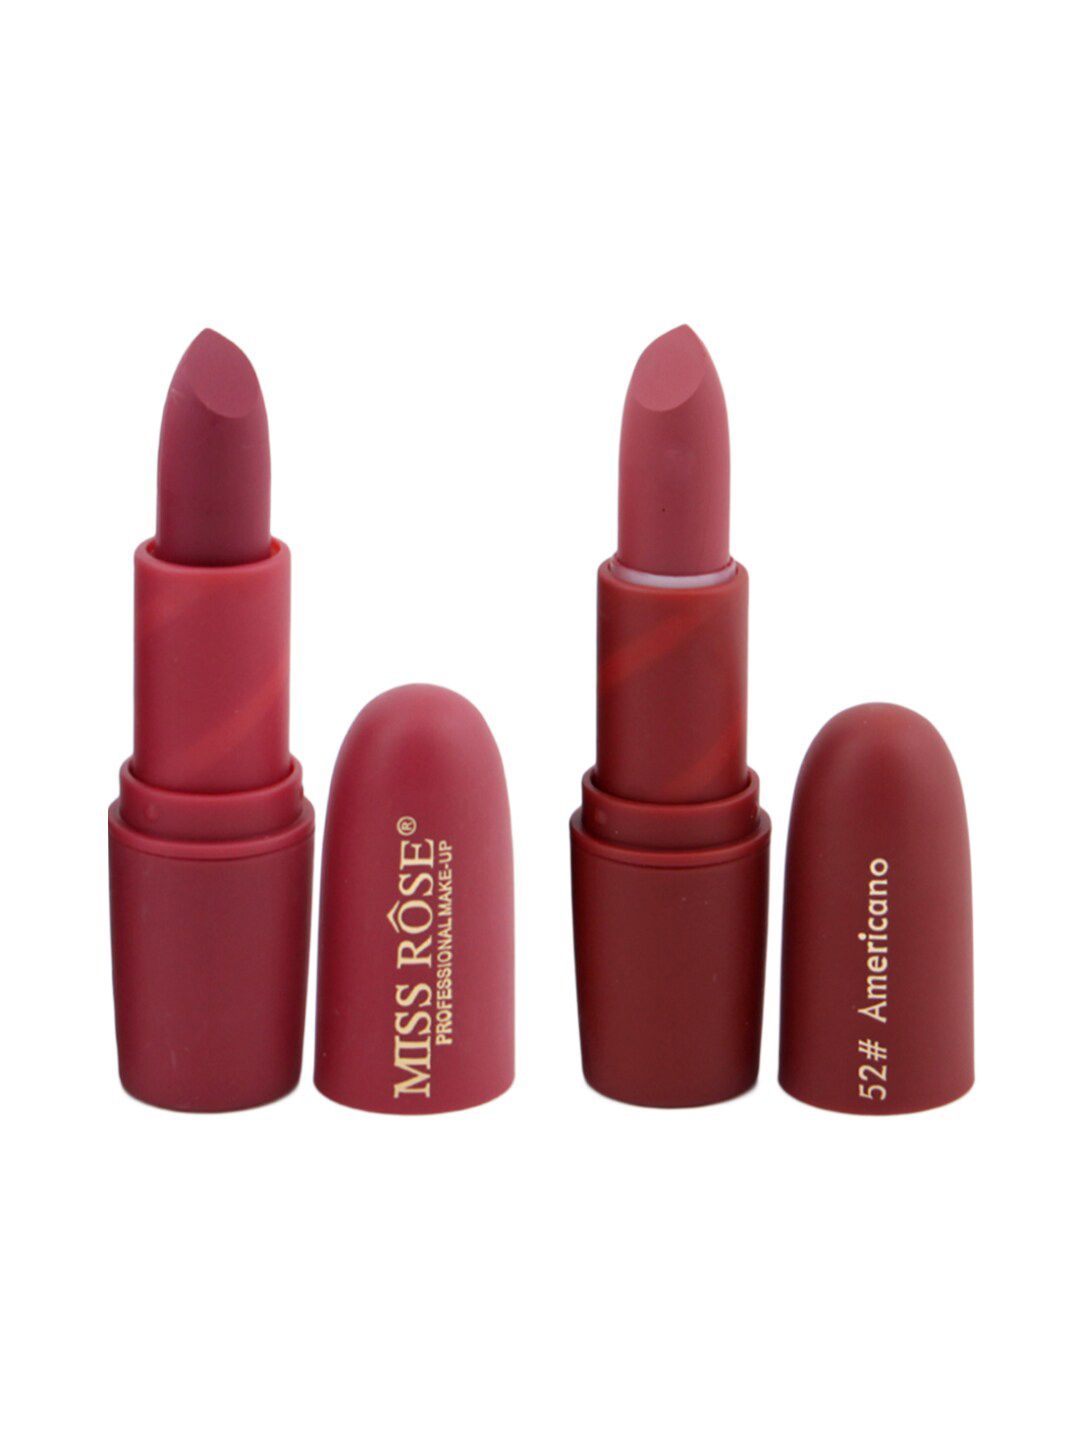 MISS ROSE Set of 2 Matte Creamy Lipsticks - Chii 49 & Americano 52 Price in India